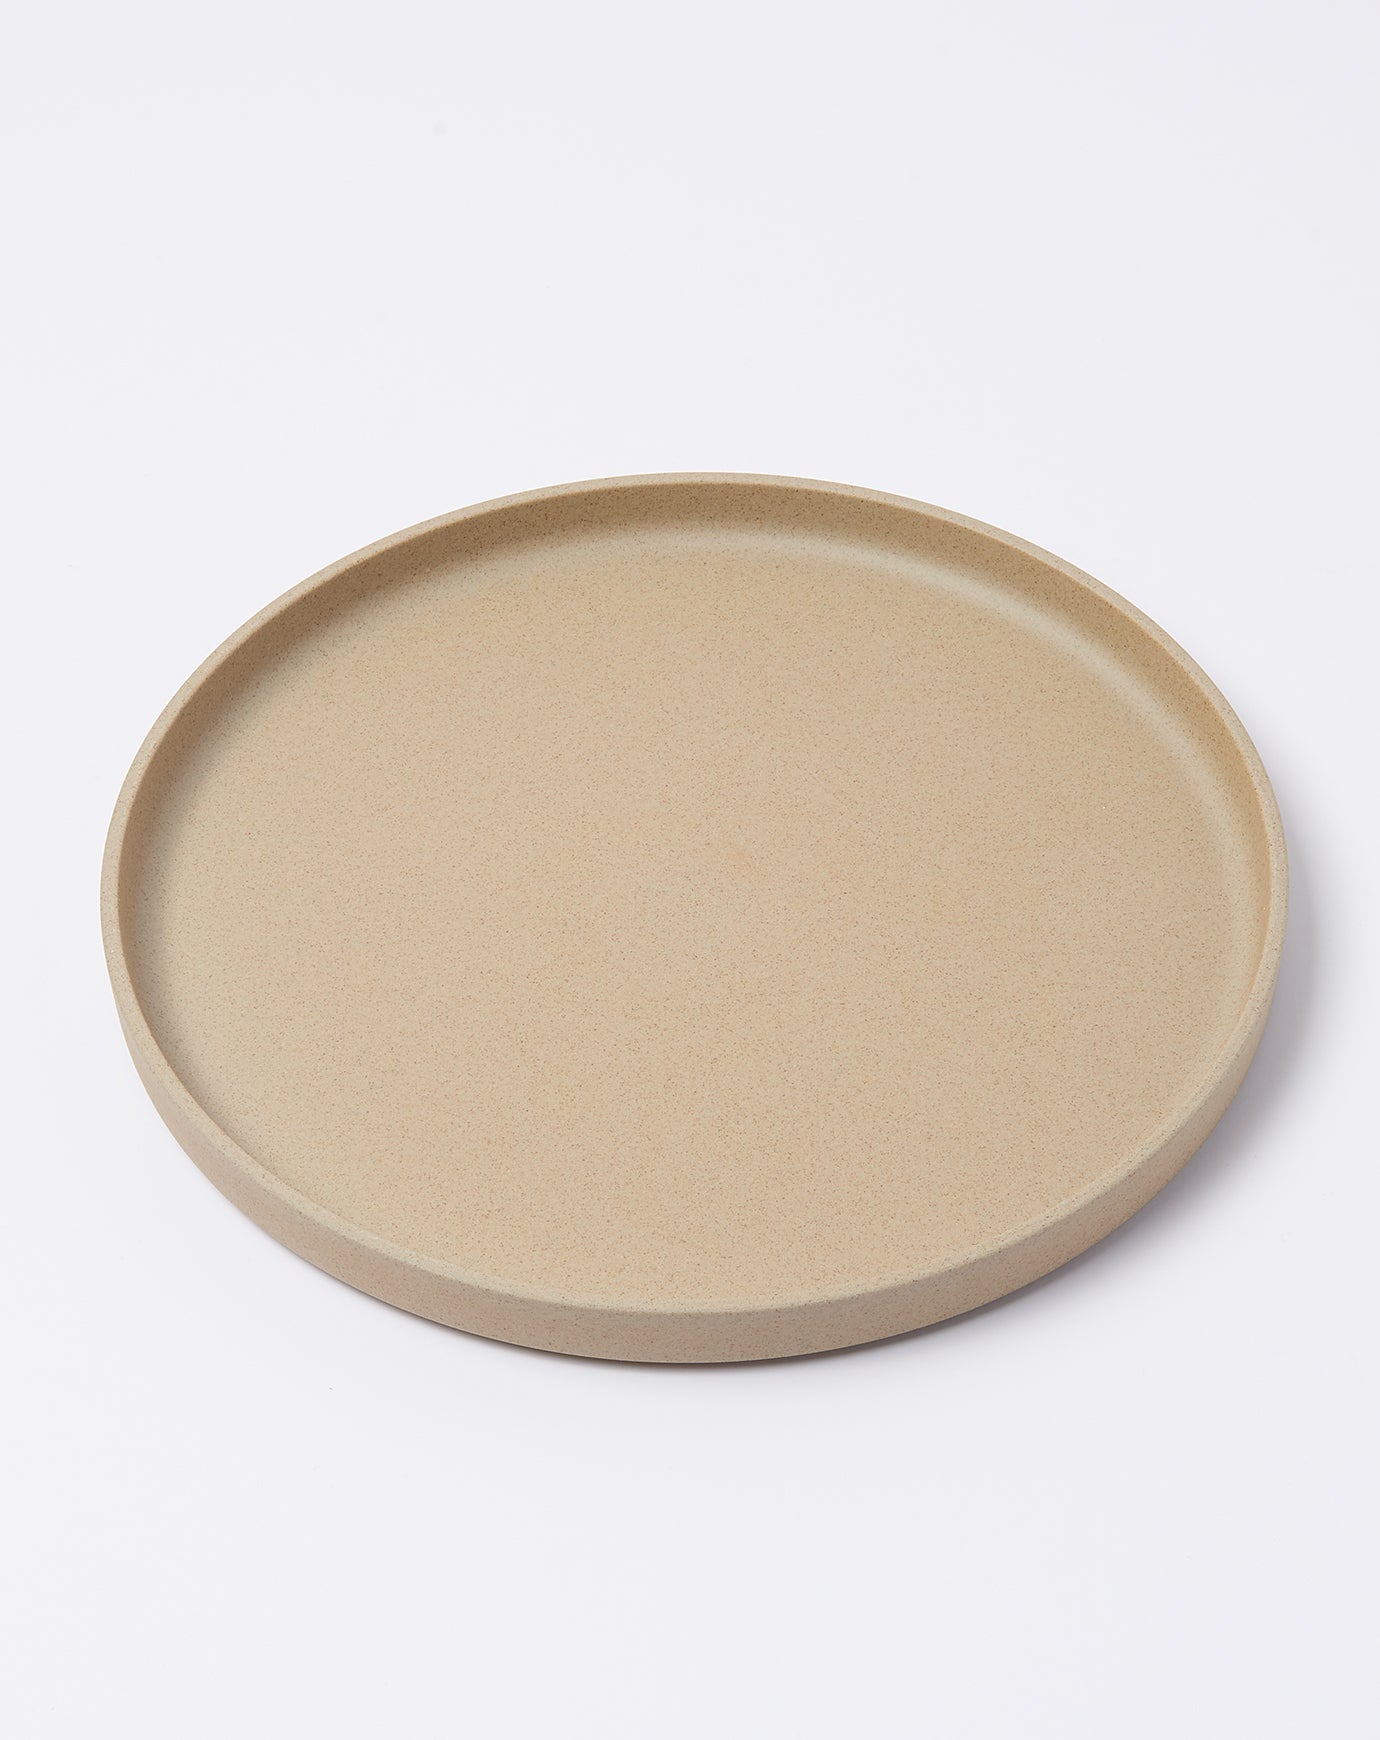 Hasami Porcelain Large Plate in Natural